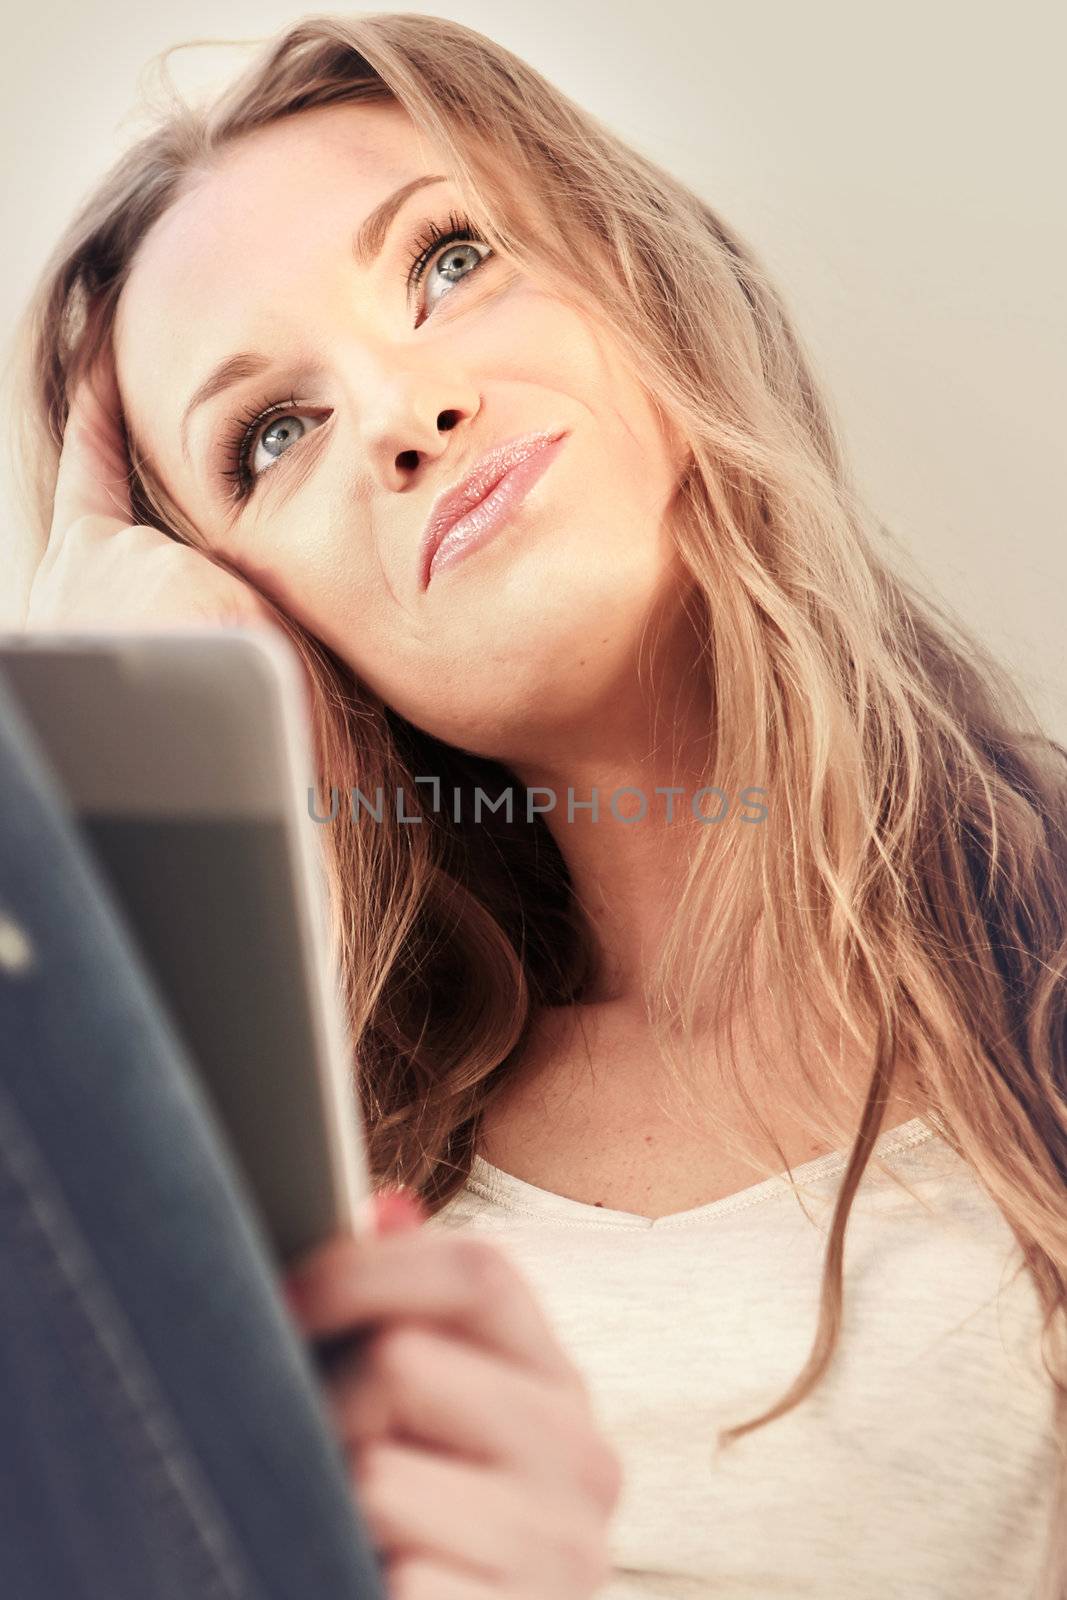 Beautiful girl reading e-book by robert_przybysz